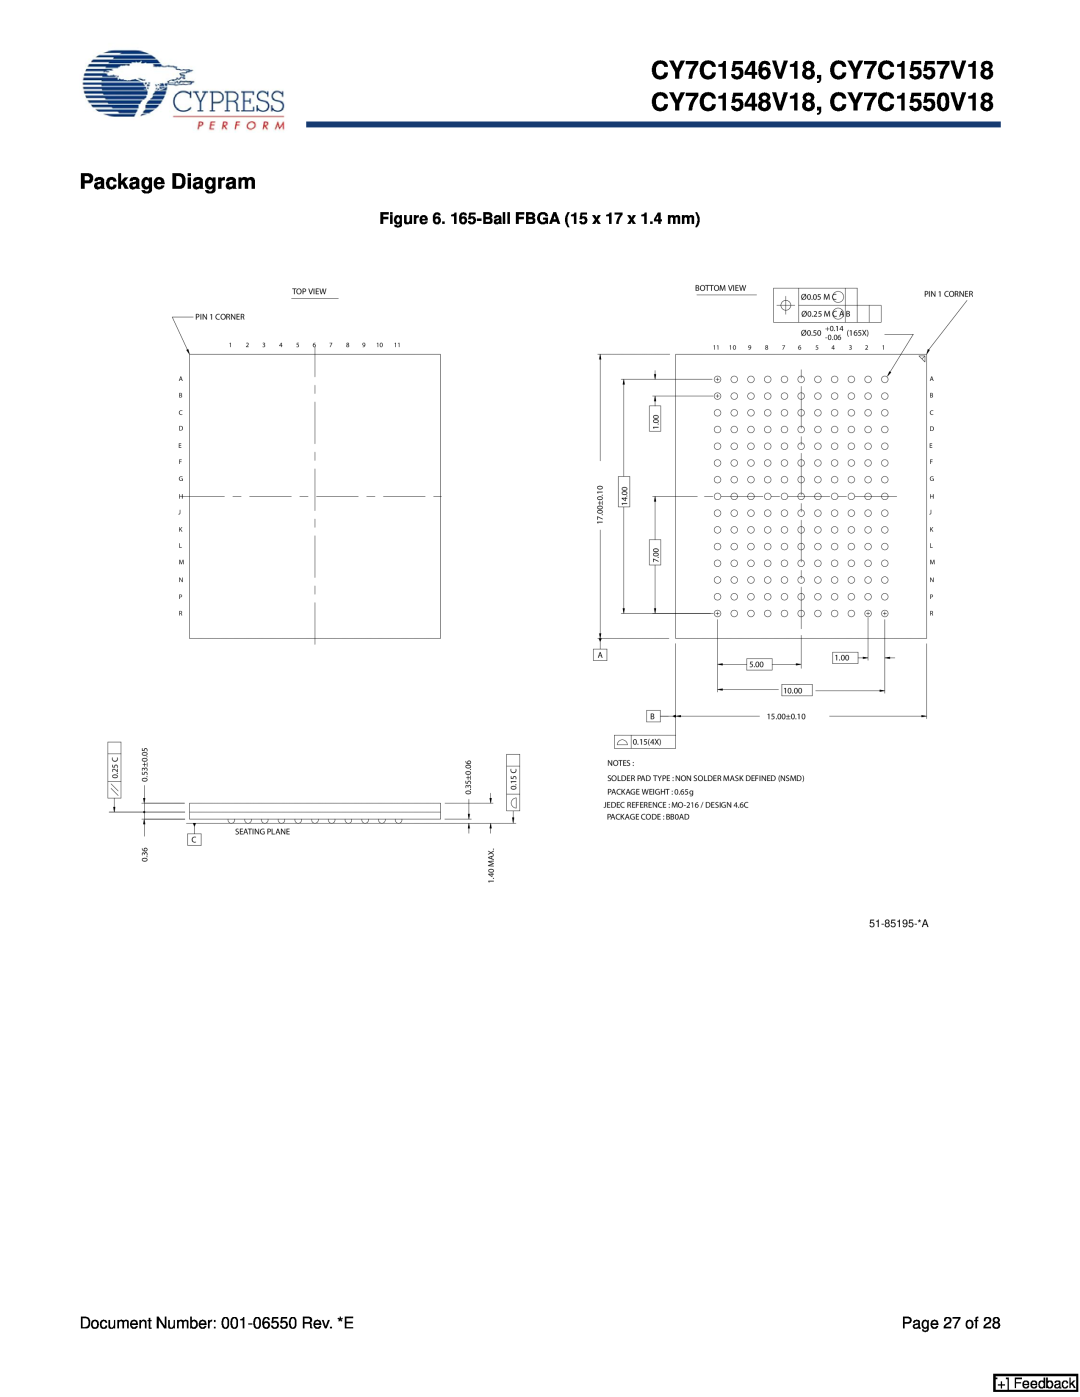 Cypress Package Diagram, CY7C1546V18, CY7C1557V18 CY7C1548V18, CY7C1550V18, 165-Ball FBGA 15 x 17 x 1.4 mm, + Feedback 